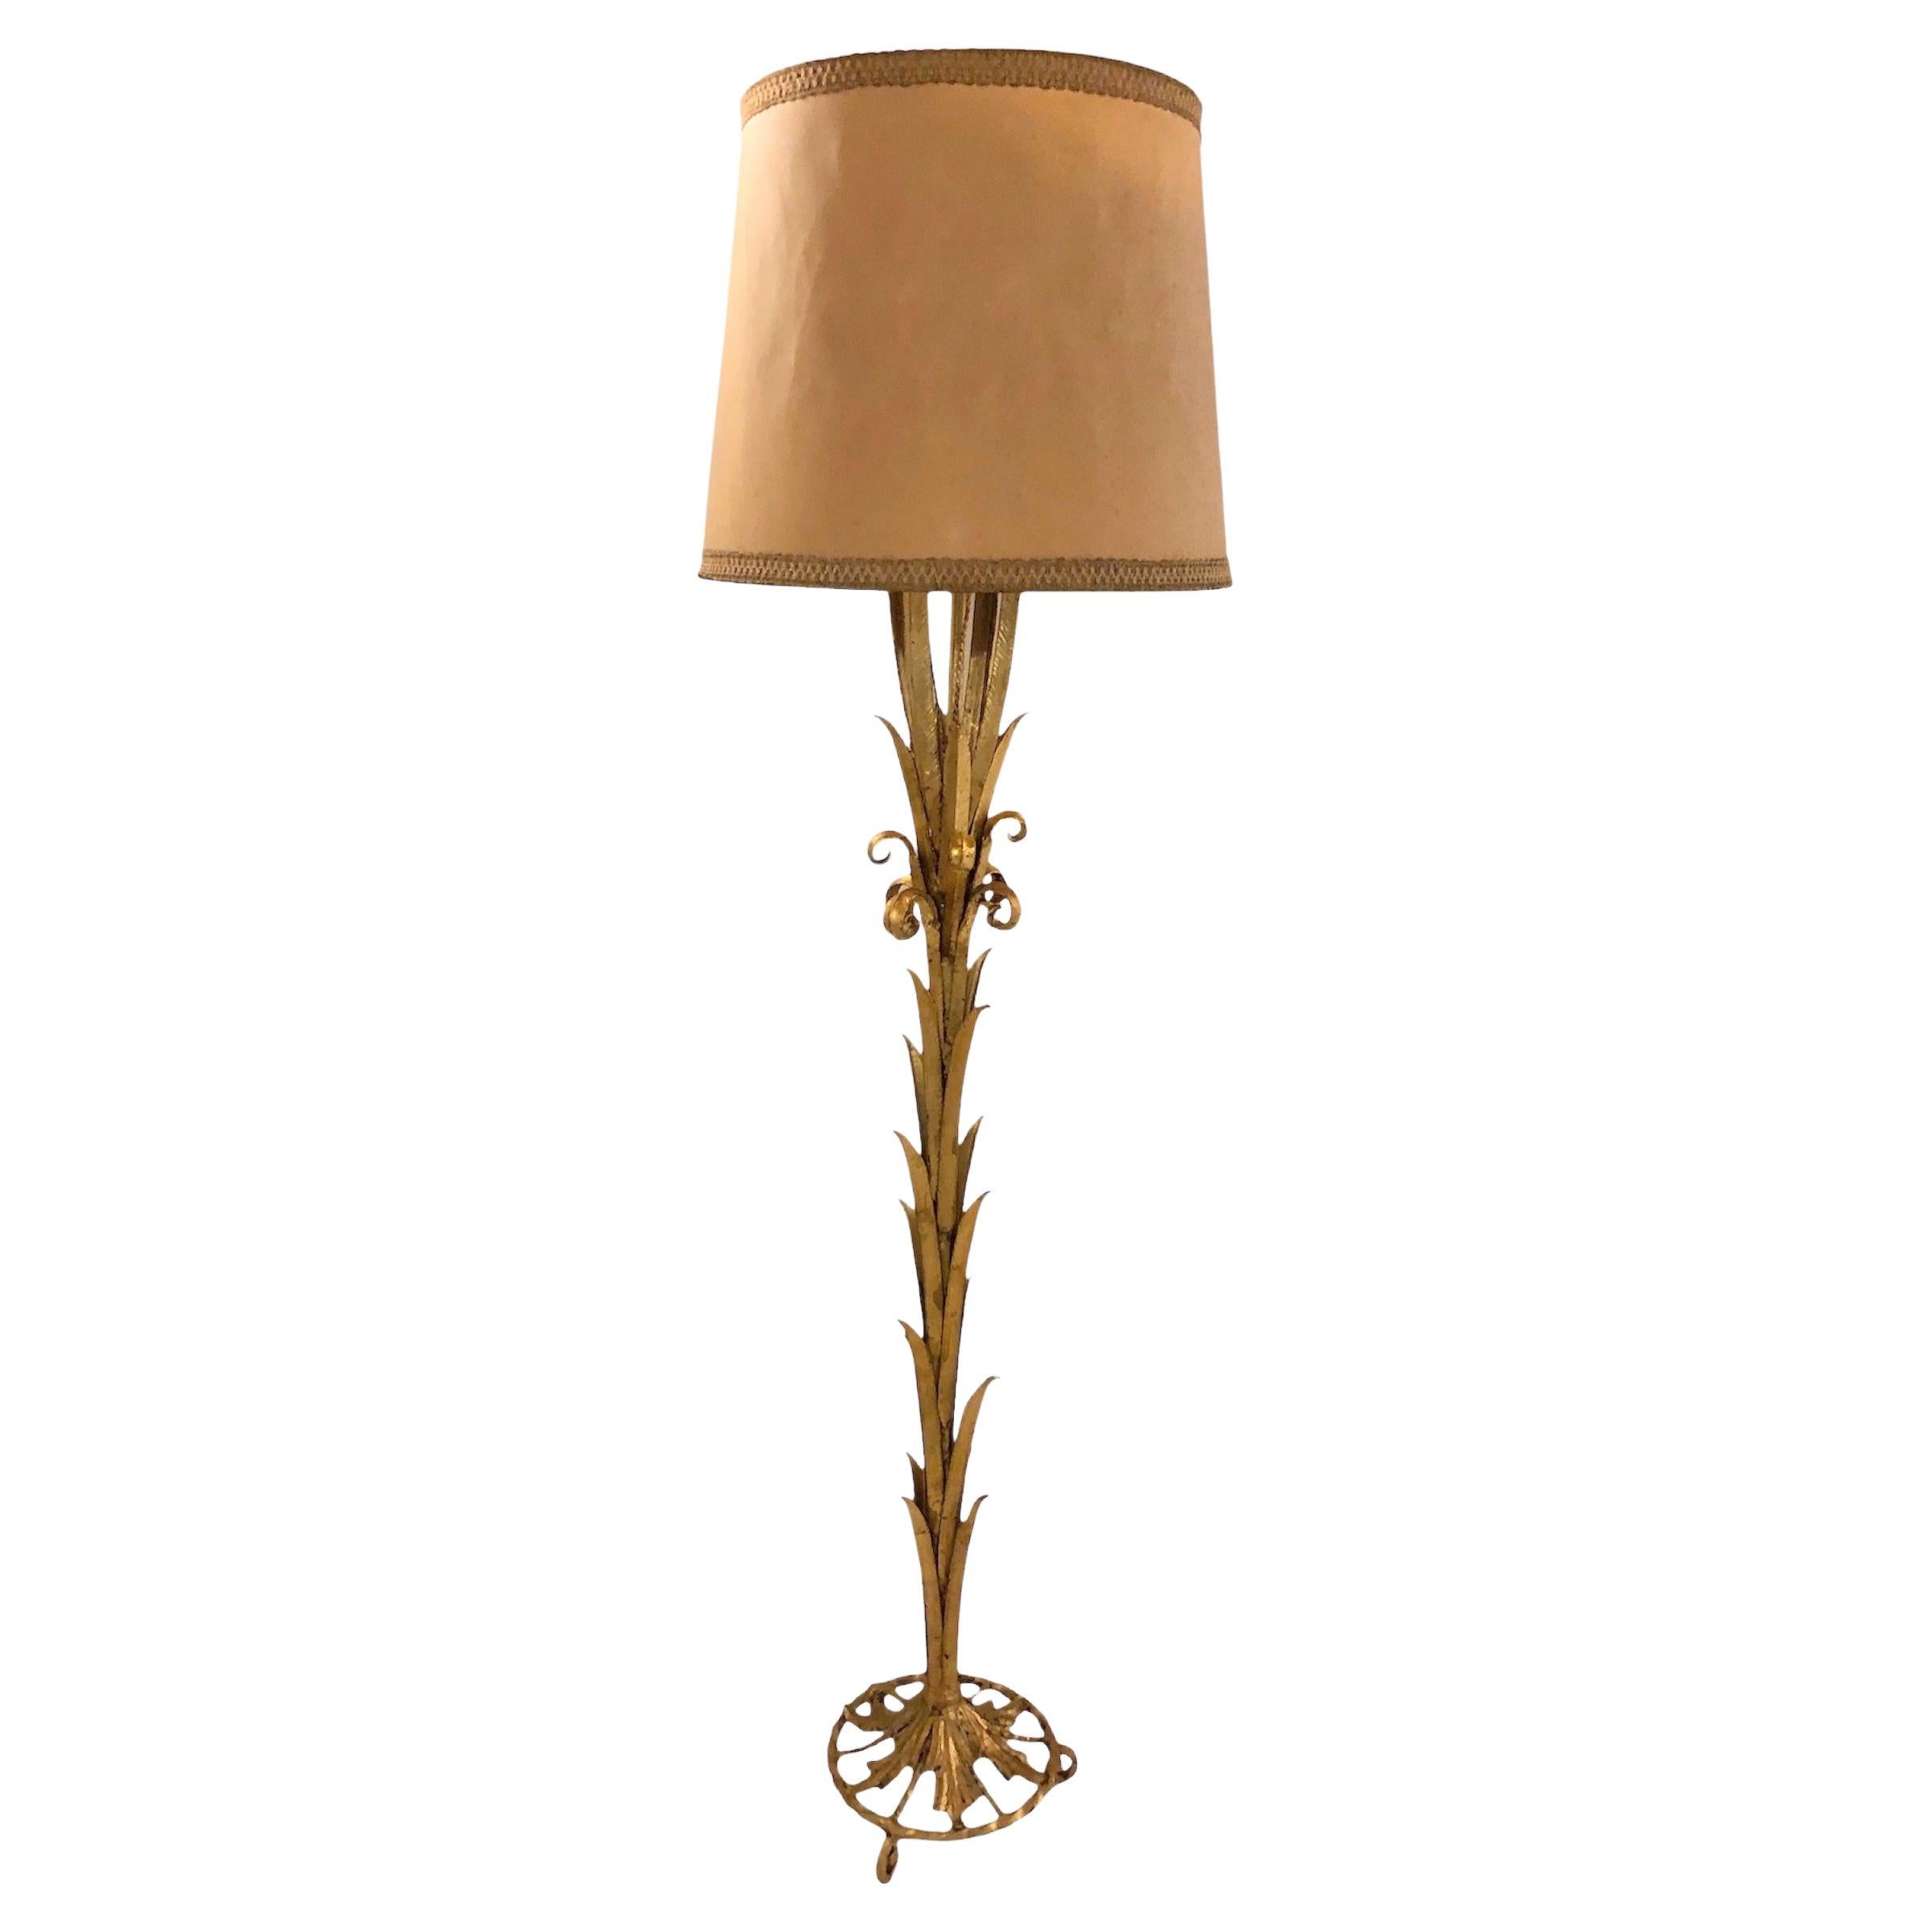 Floor Lamp 1900, Jugendstil, Art Nouveau, Liberty